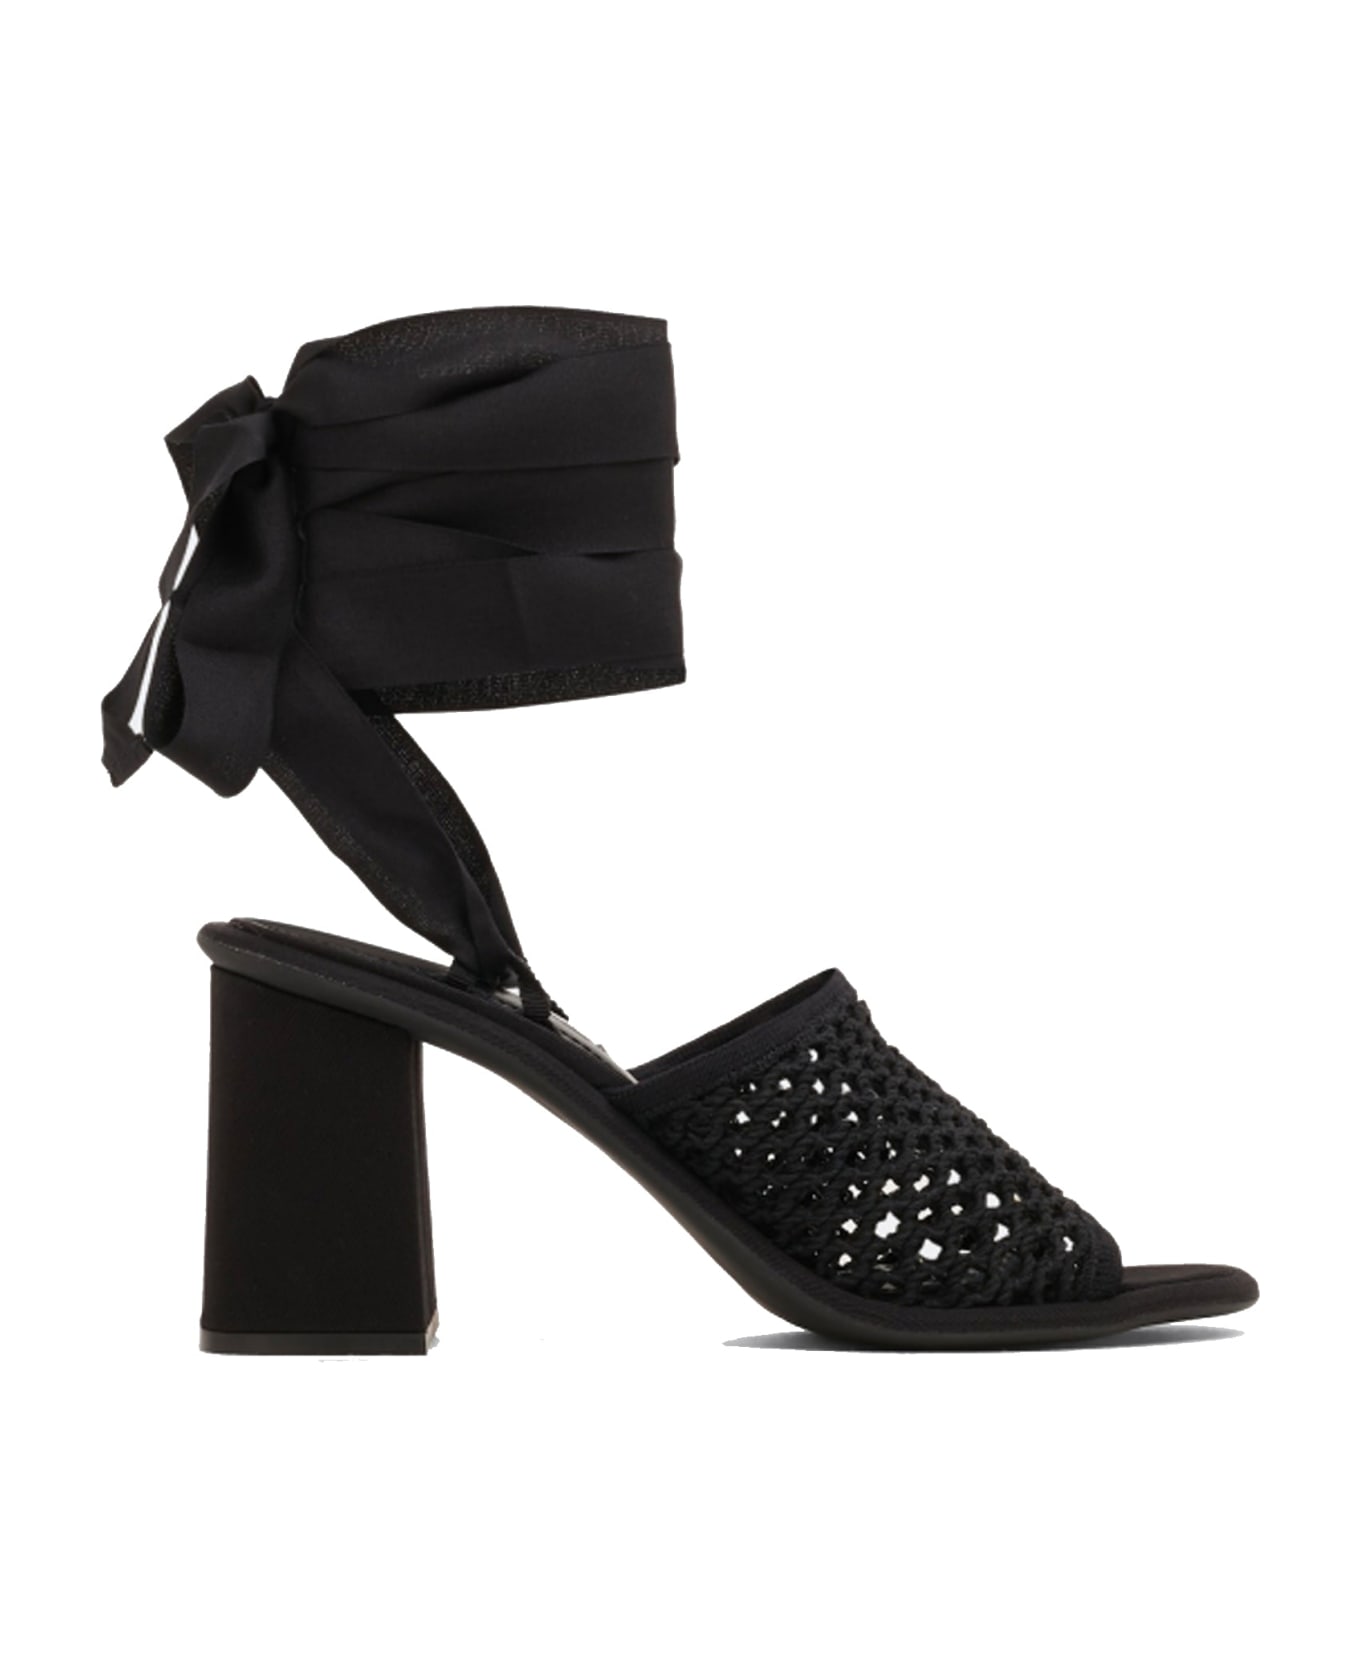 Miu Miu Ankle Tie-fastening Sandals - Black